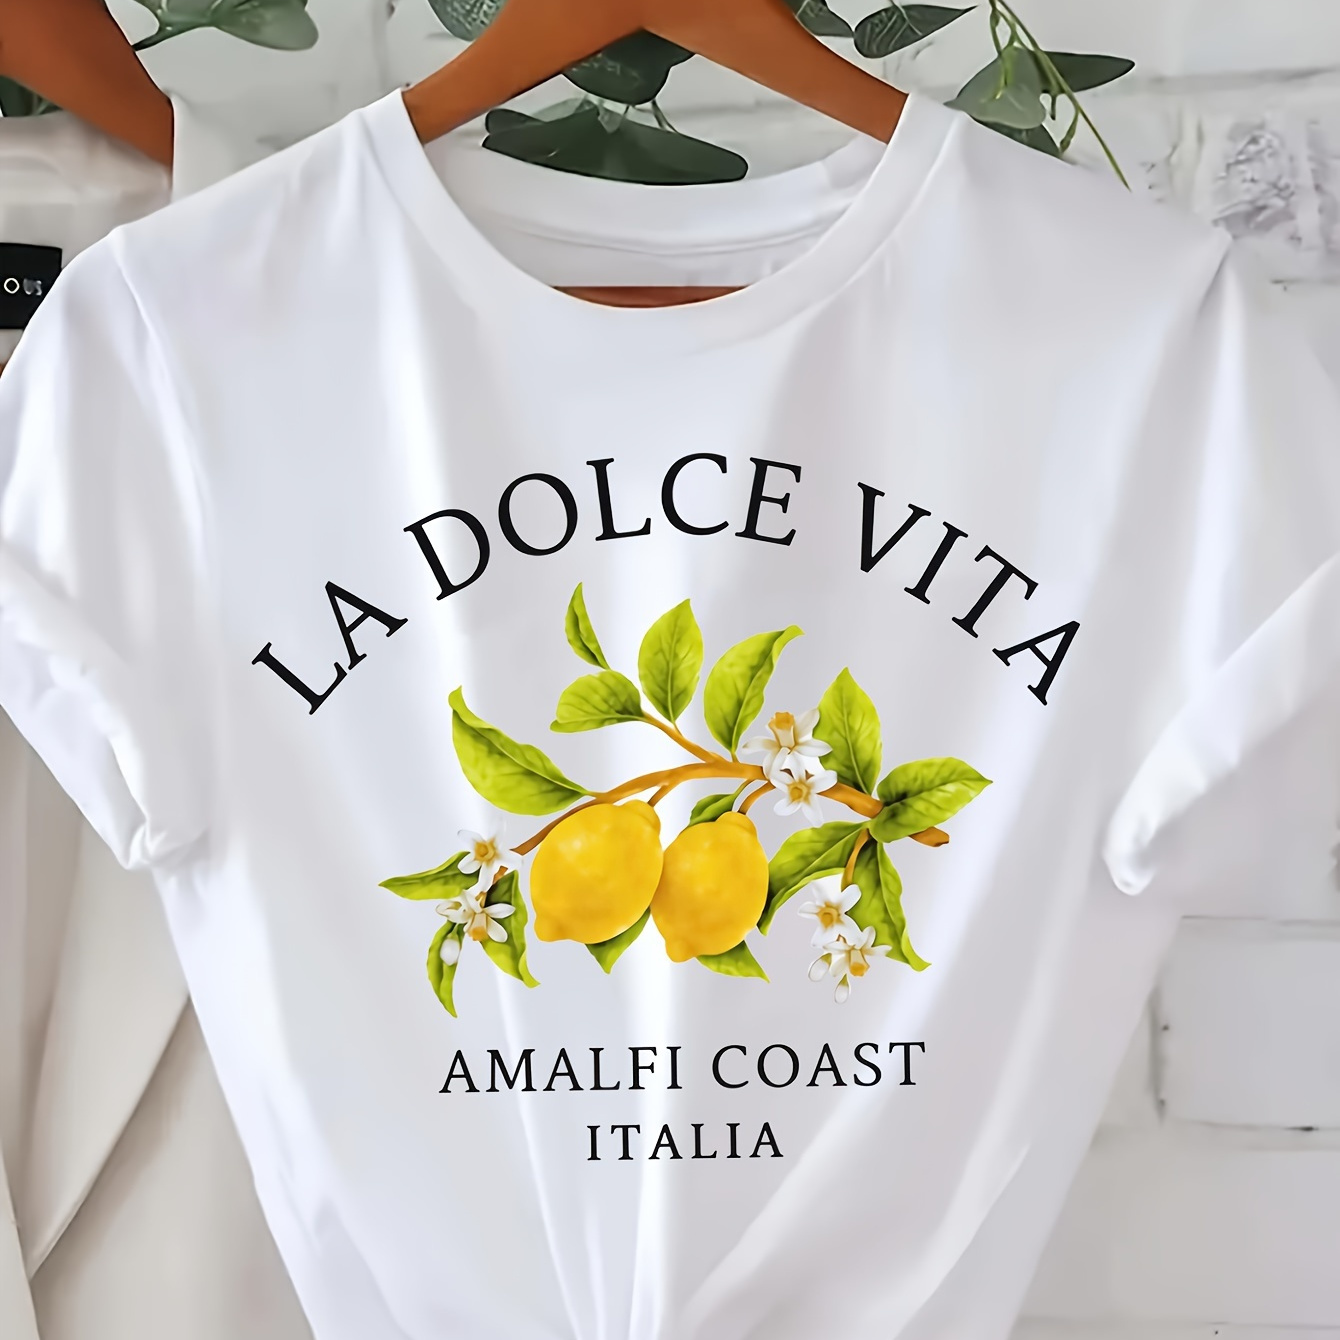 

Letter & Lemon Print T-shirt, Short Sleeve Crew Neck Casual Top For Summer & Spring, Women's Clothing